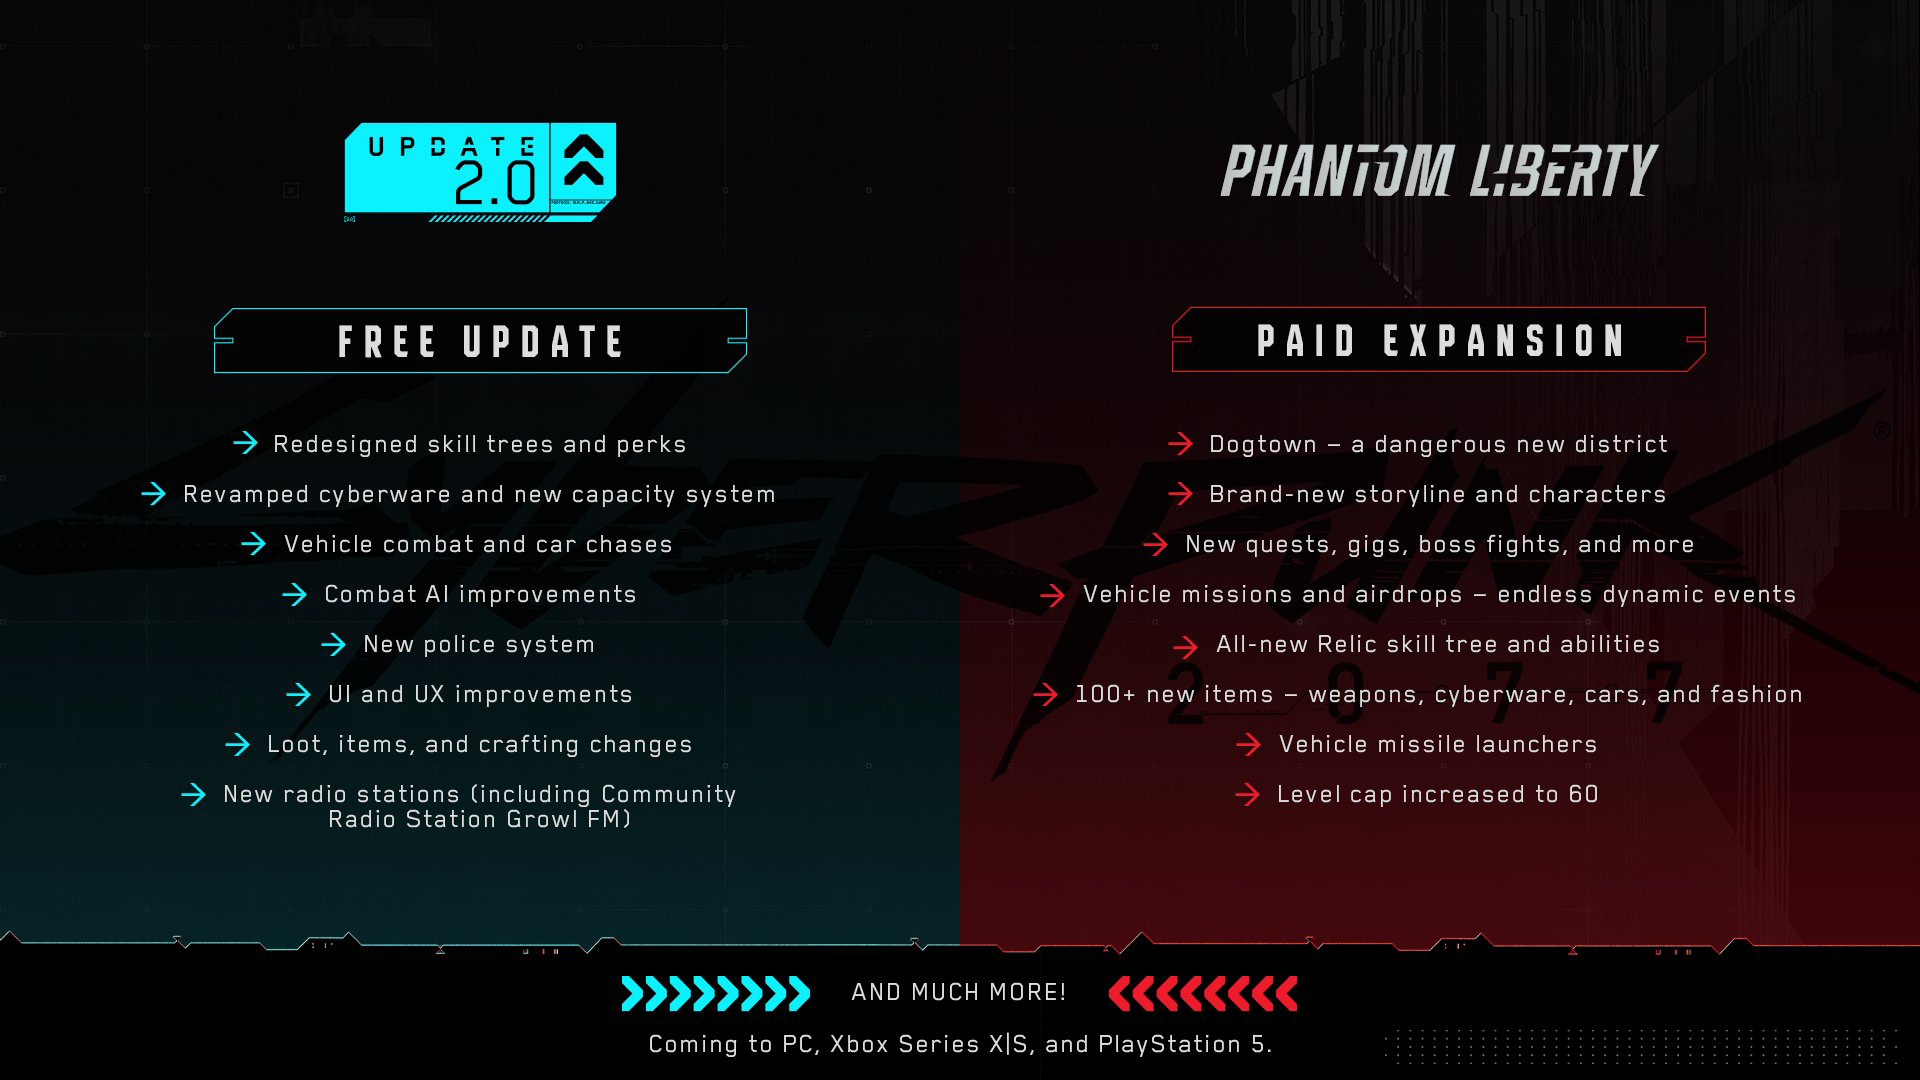 Cyberpunk 2077 Update 2.0 and Phantom Liberty infographic